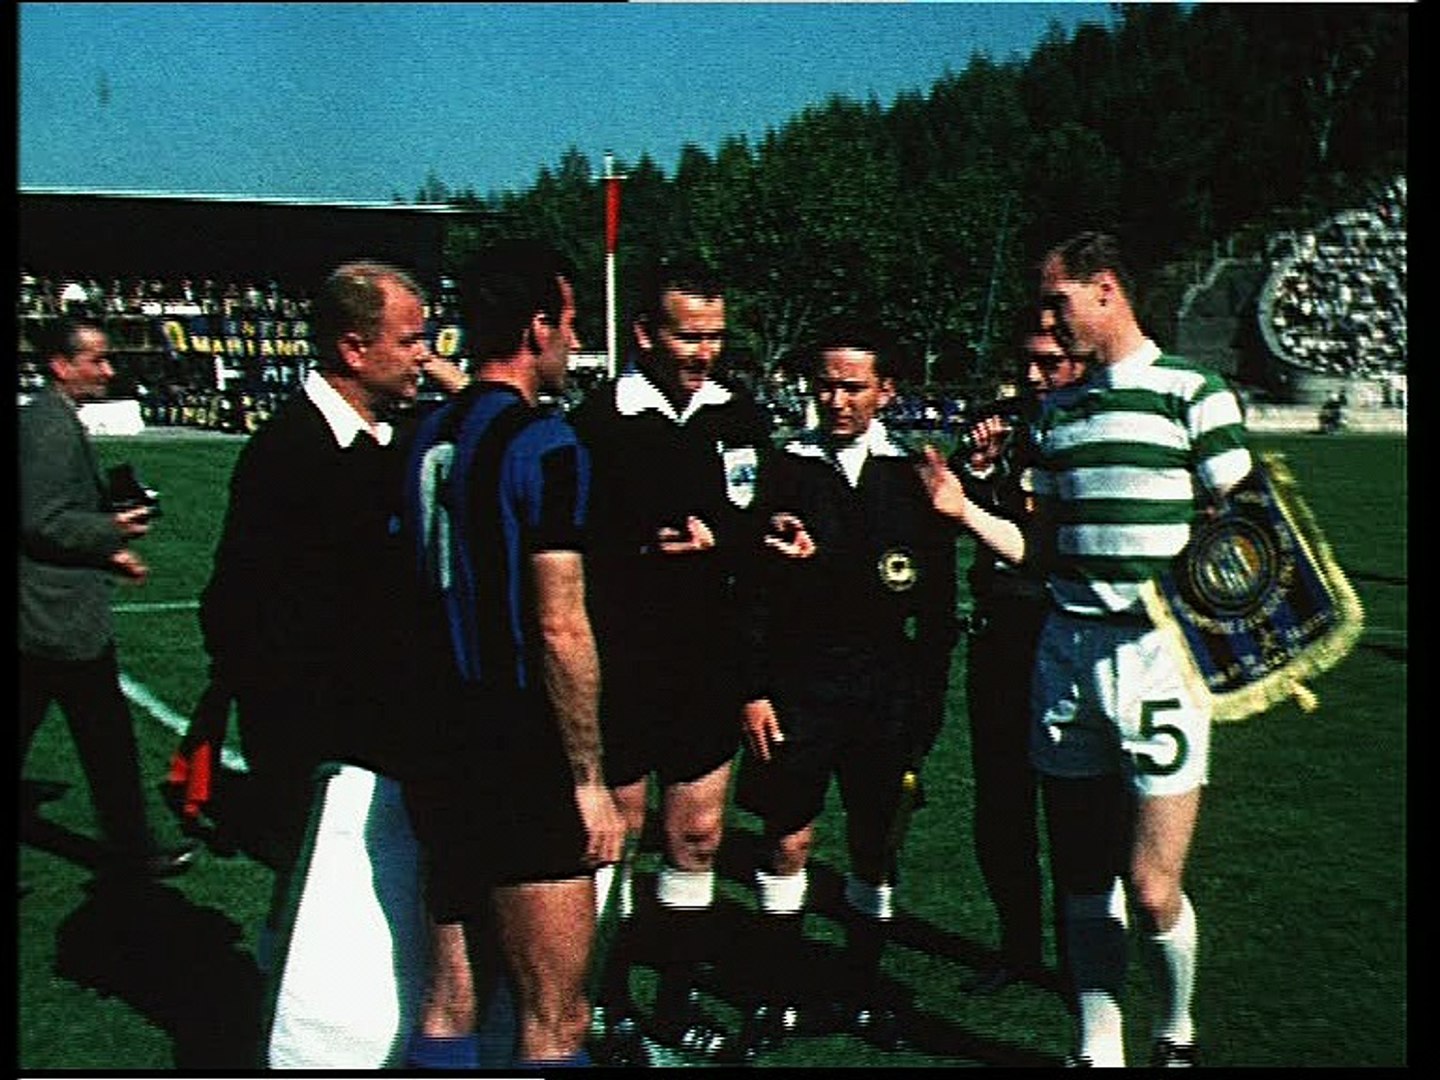 Celtic 1967 European Cup Winners